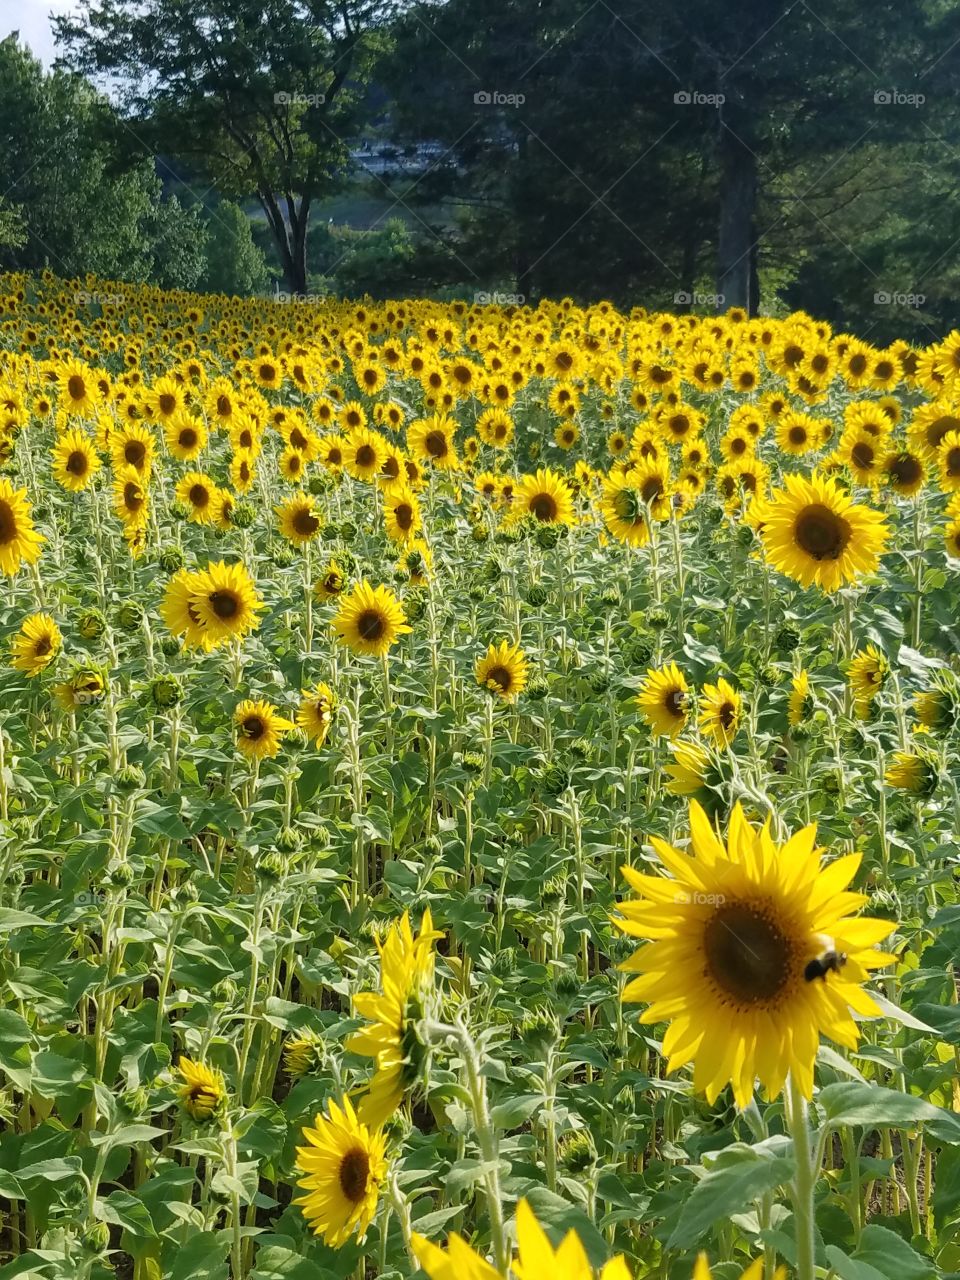 Sunflowers on the roadside